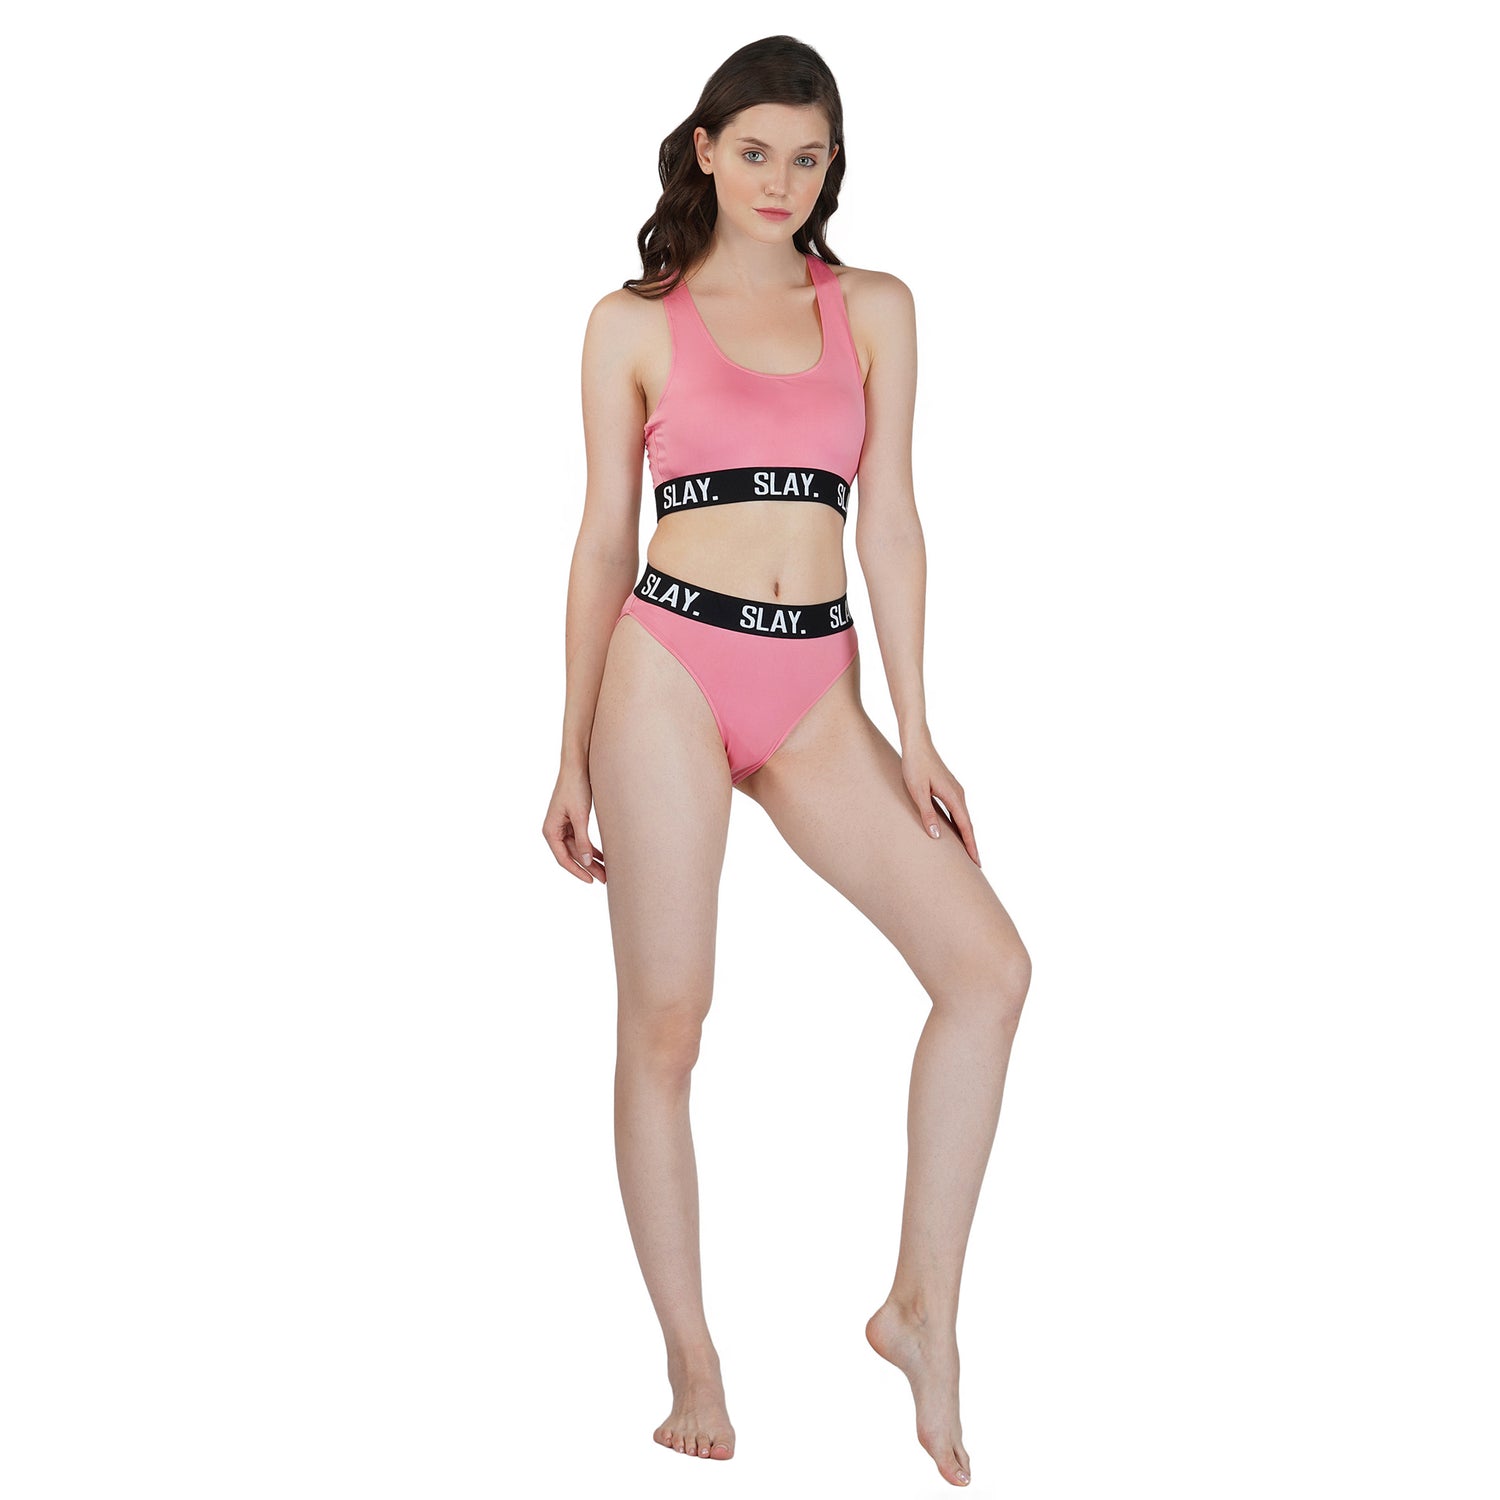 SLAY. Women's Underwear Lingerie Modern Sports Bra and Panty Set Pink